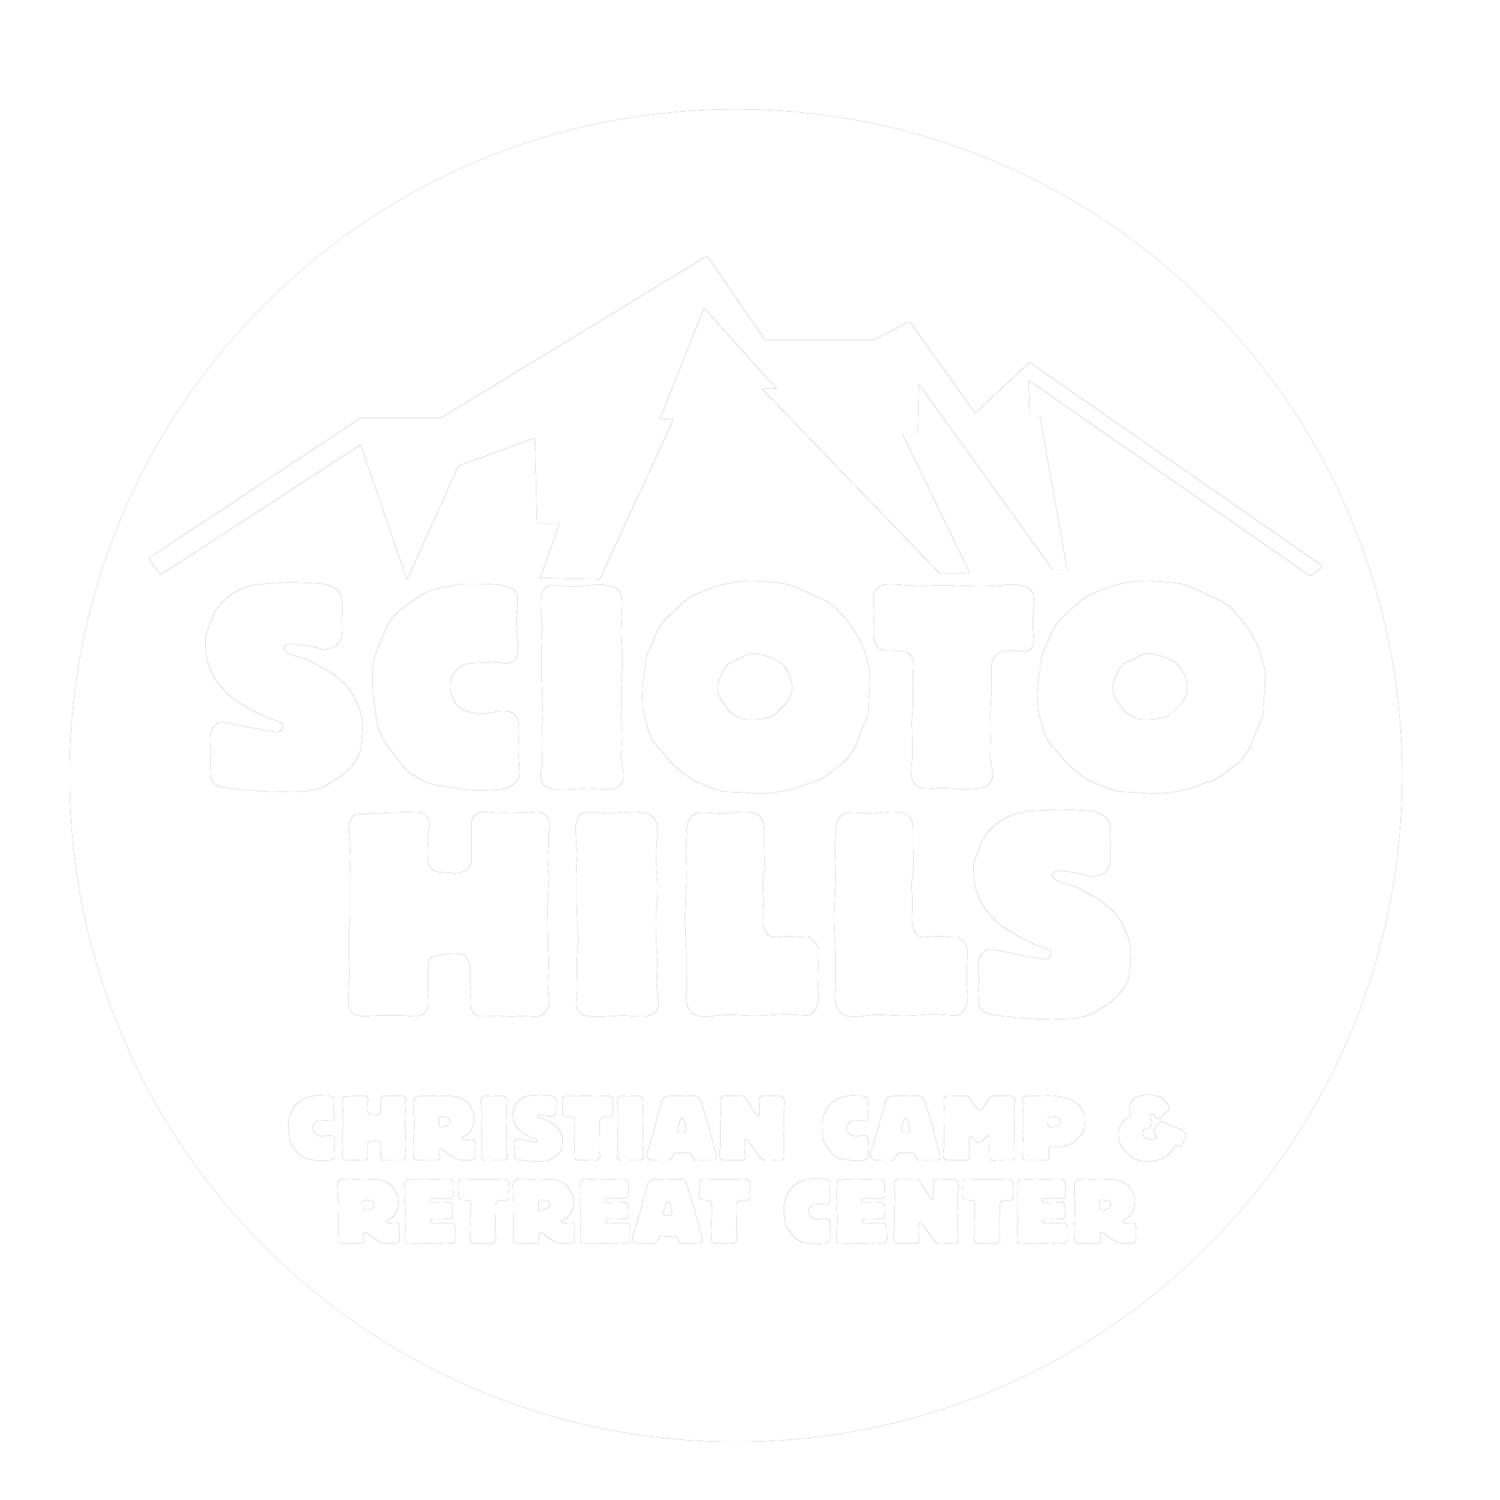 Christian Camp Logo - Scioto Hills